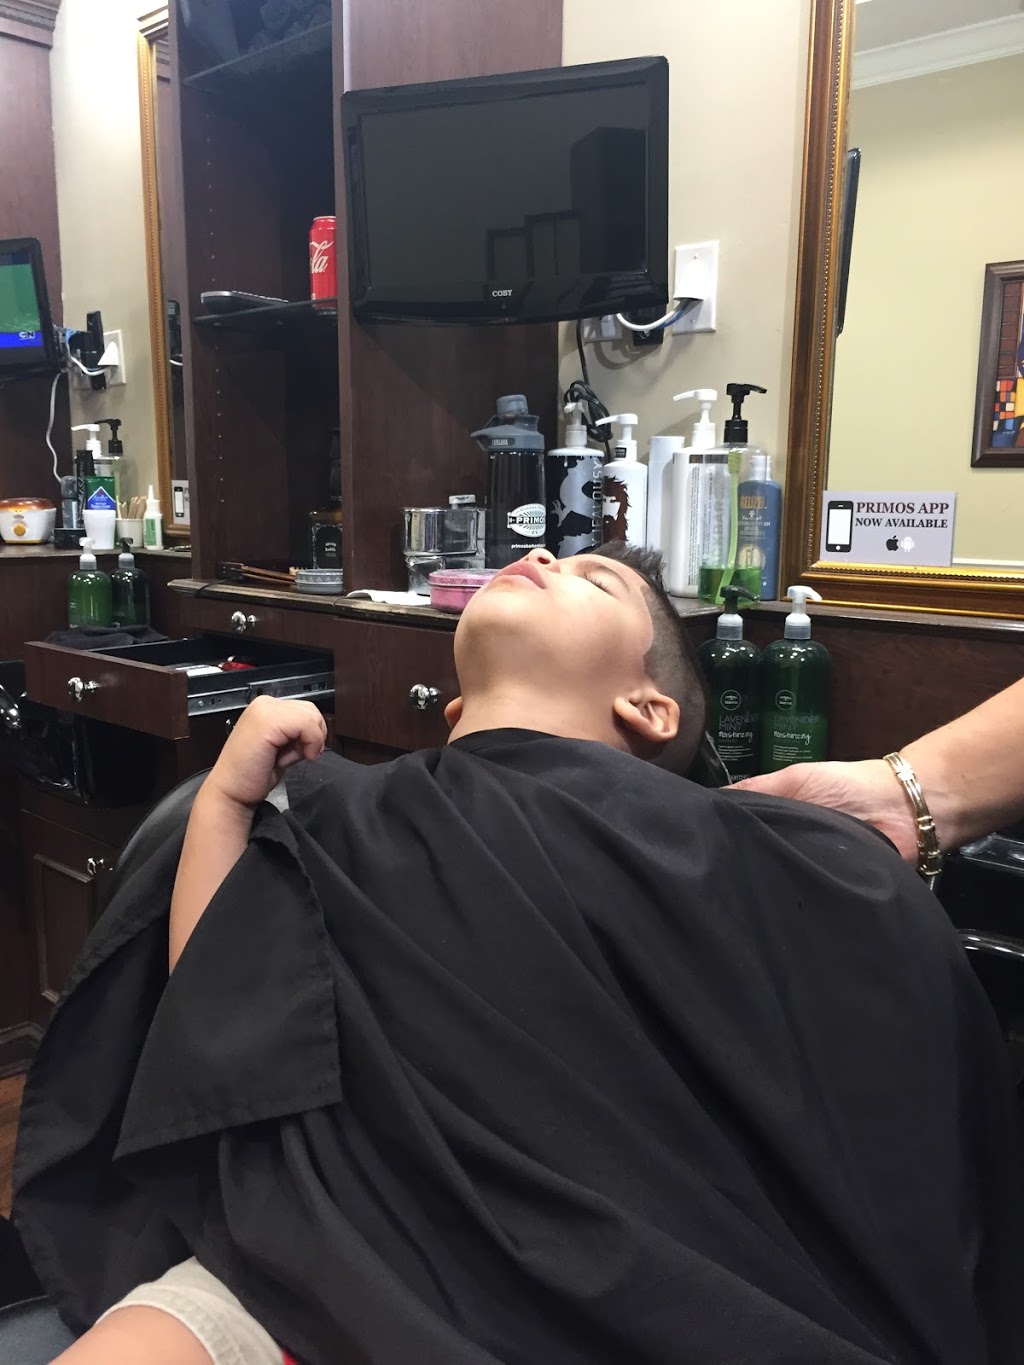 Primos Barber Shop | 9497 S Dixie Hwy, Miami, FL 33156 | Phone: (305) 631-2646